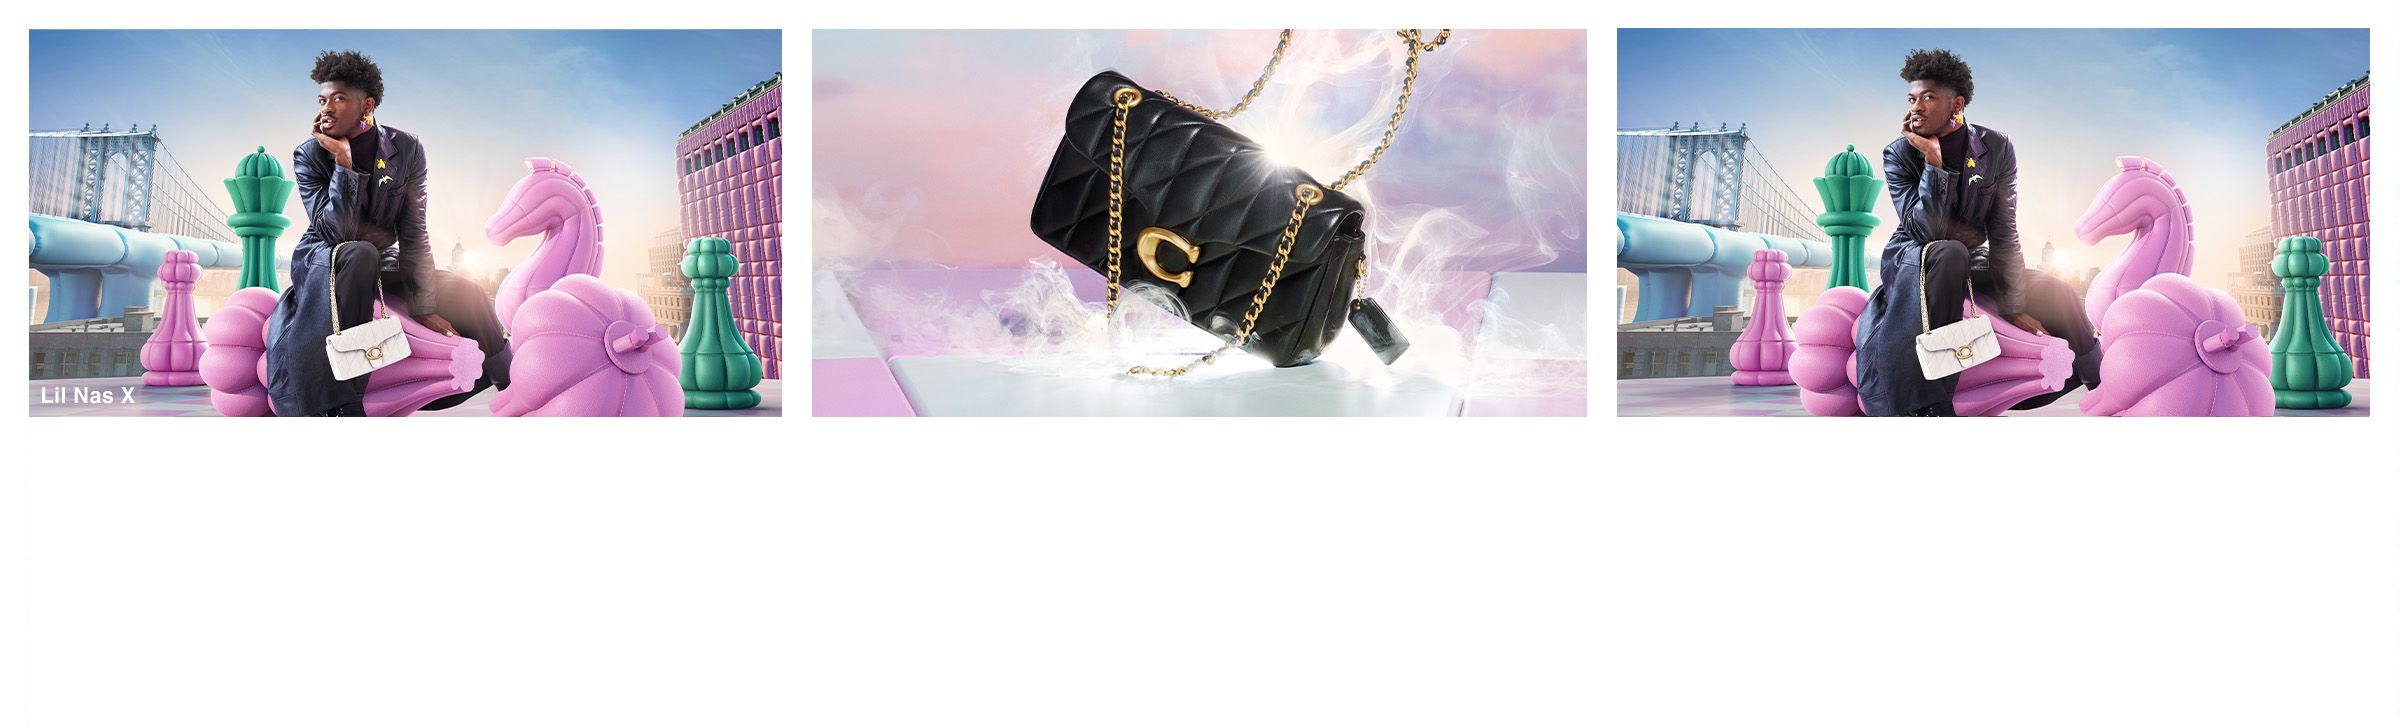 Lil Nas X and Coach Brand Handbags